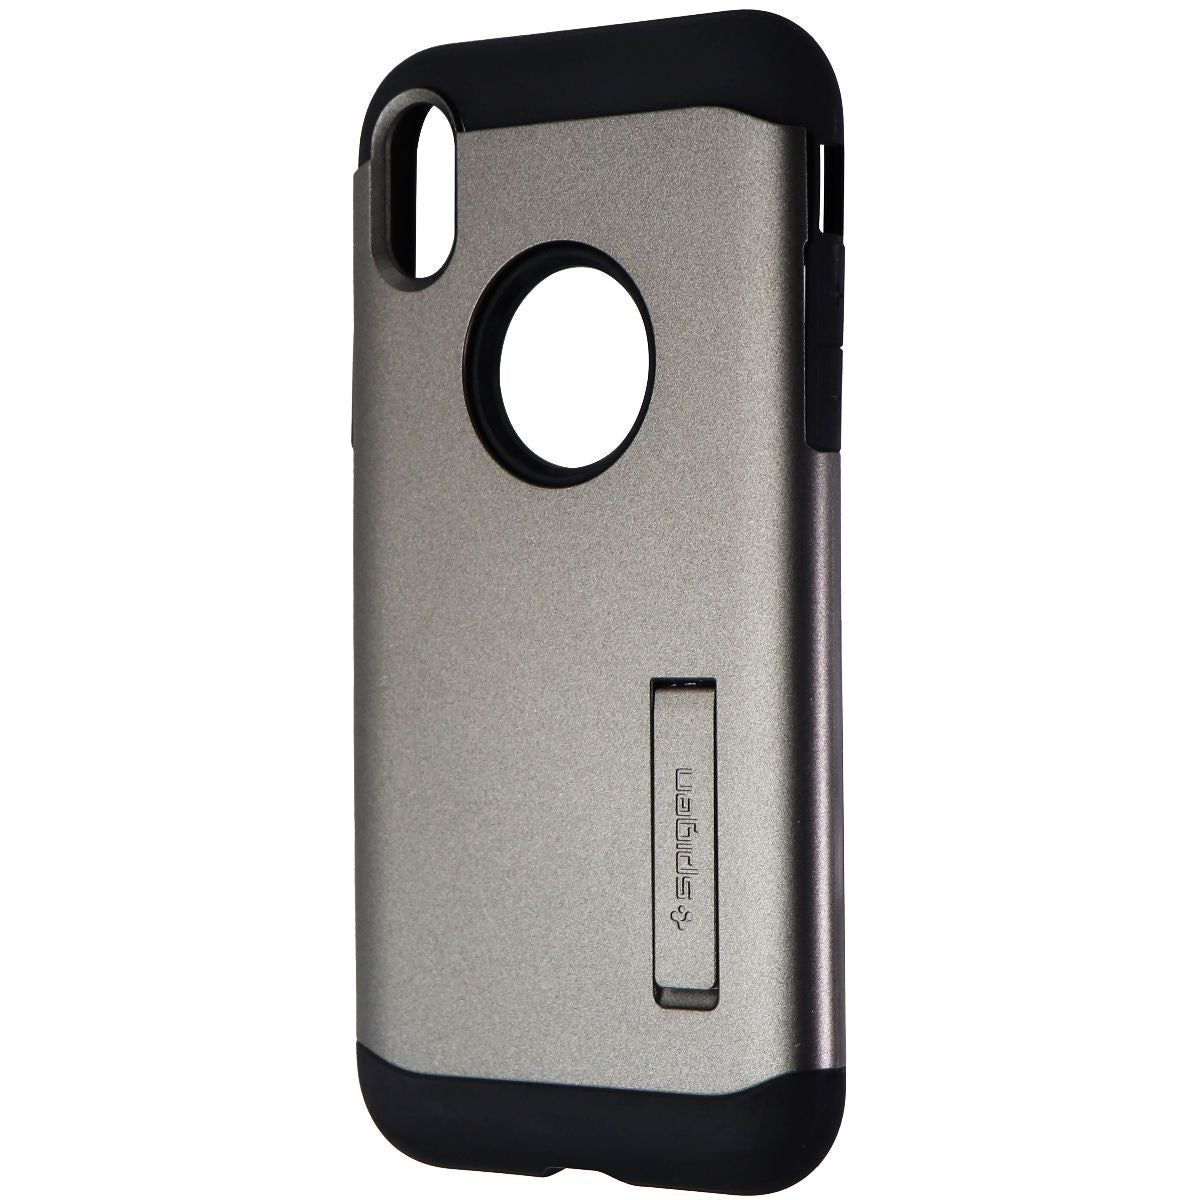 Spigen Slim Armor Series Case for Apple iPhone XR - GunMetal/Black Cell Phone - Cases, Covers & Skins Spigen    - Simple Cell Bulk Wholesale Pricing - USA Seller